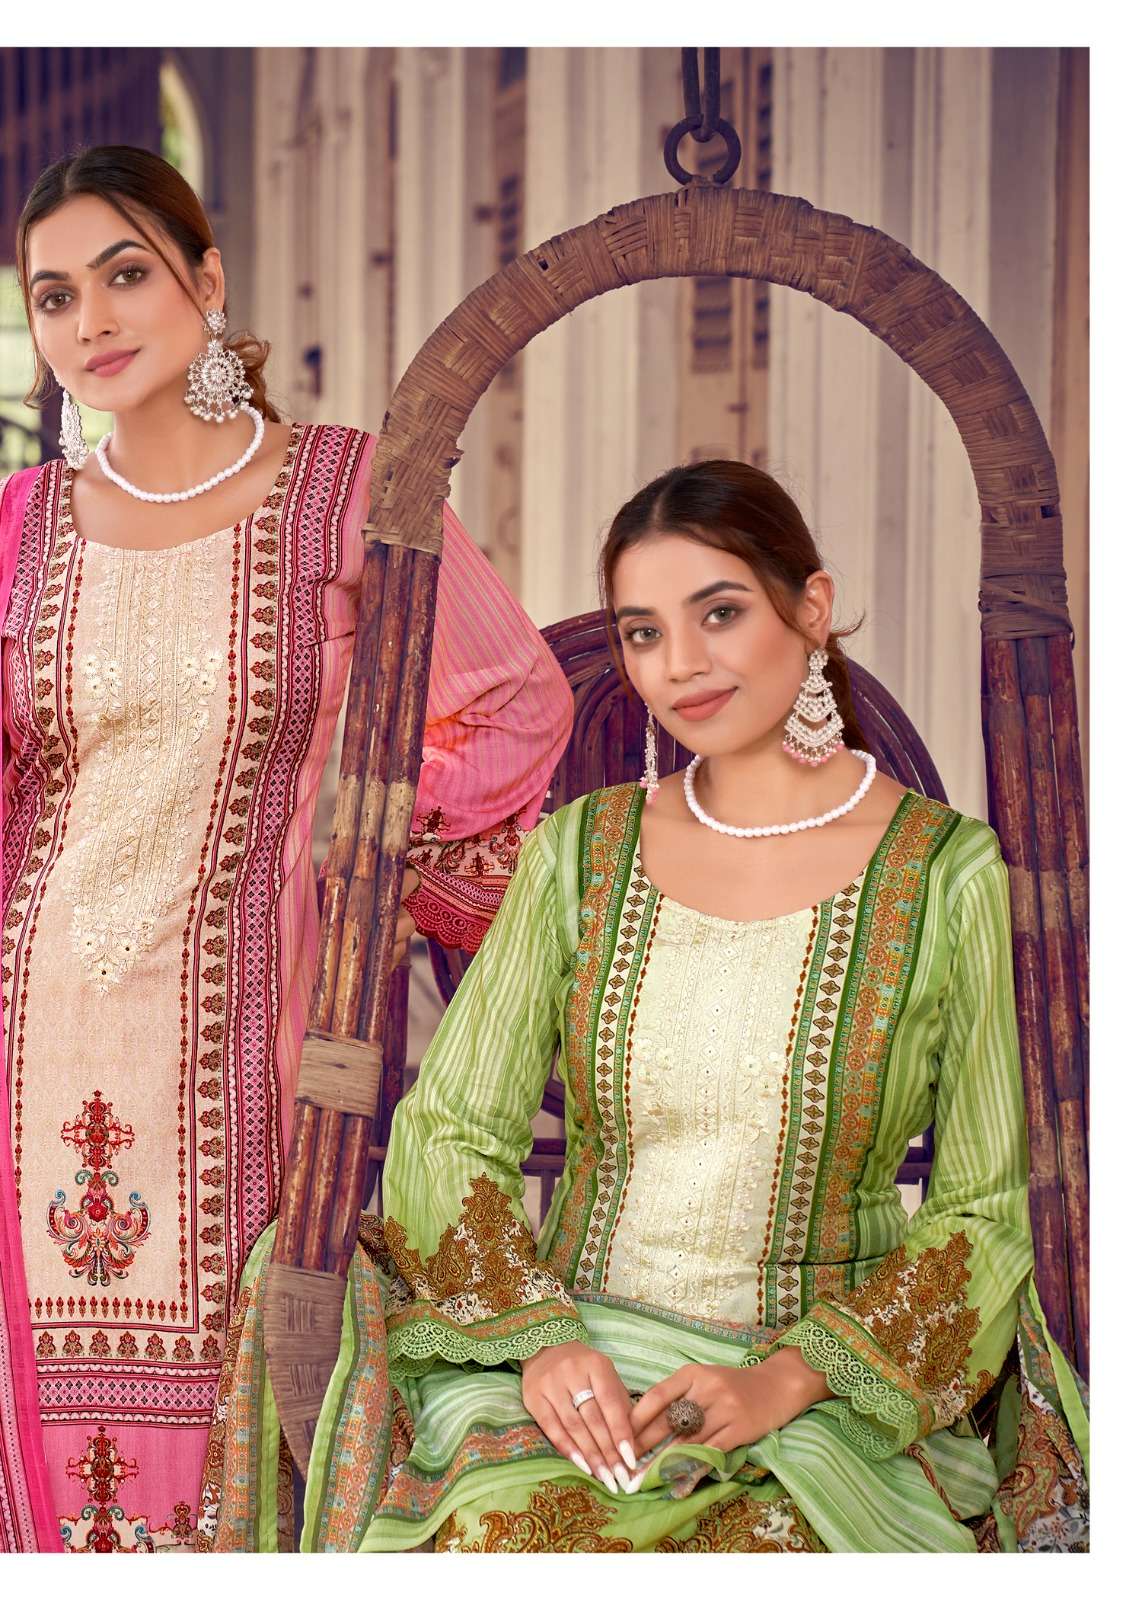 hermitage clothing aarzoo 1001-1006 series unstich designer salwar kameez catalogue manufacturer surat 